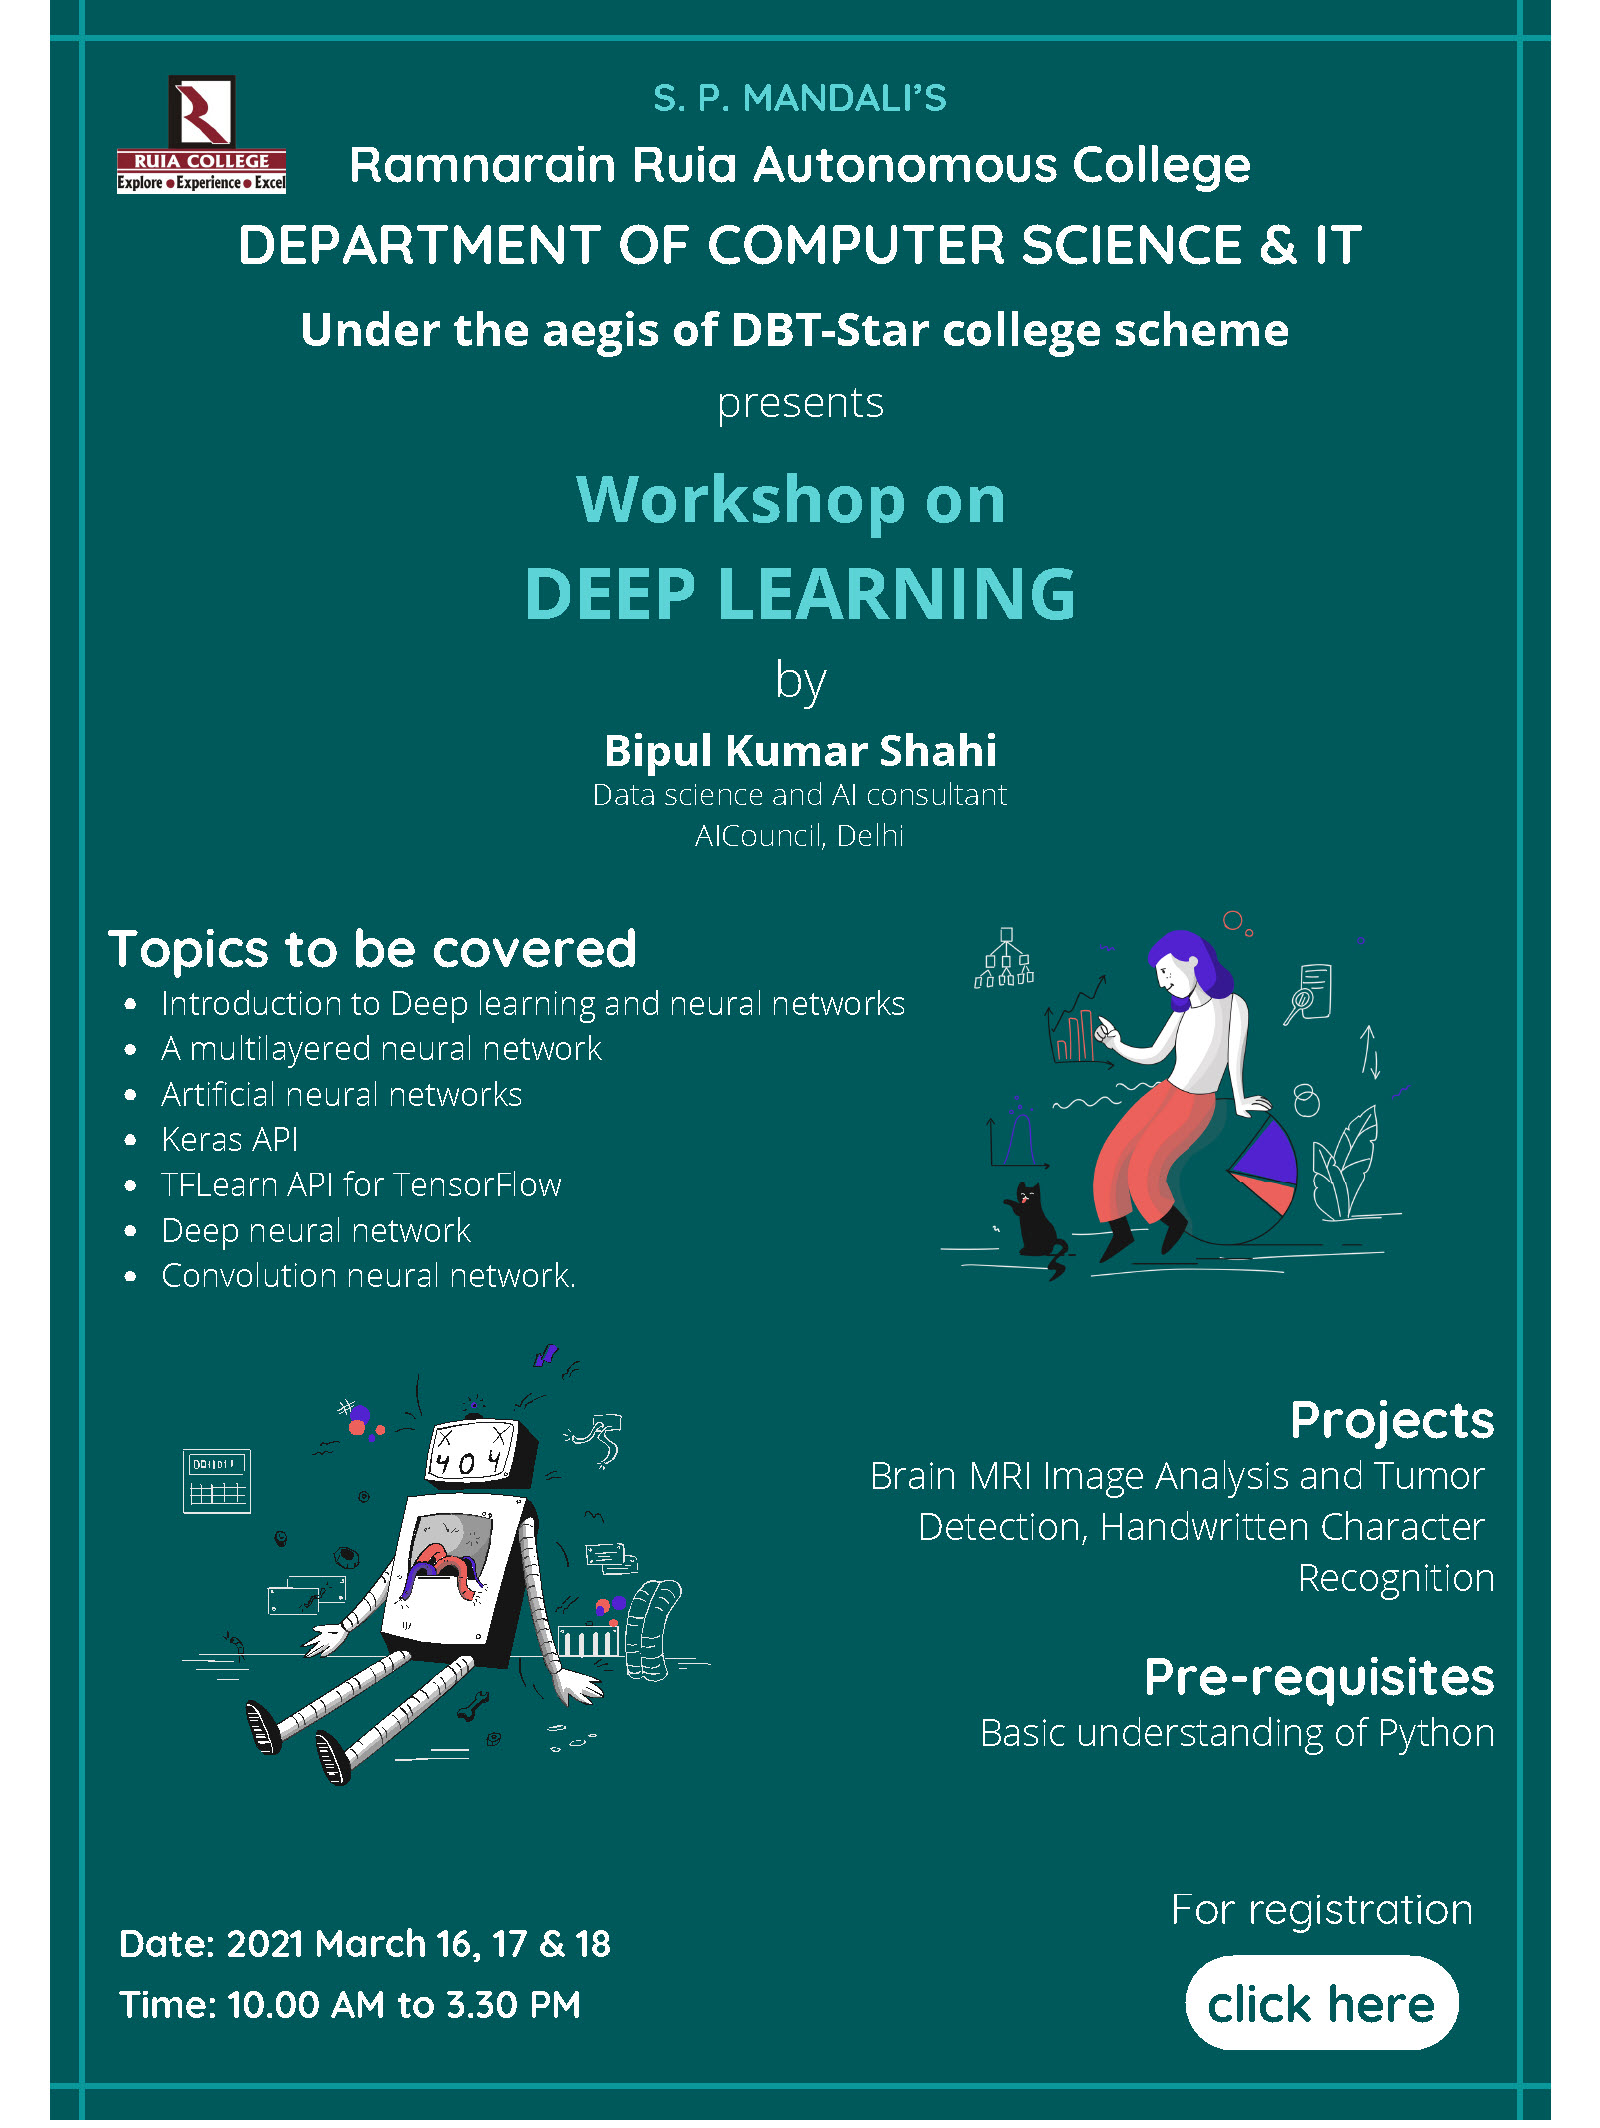 Workshop on Deep Learning